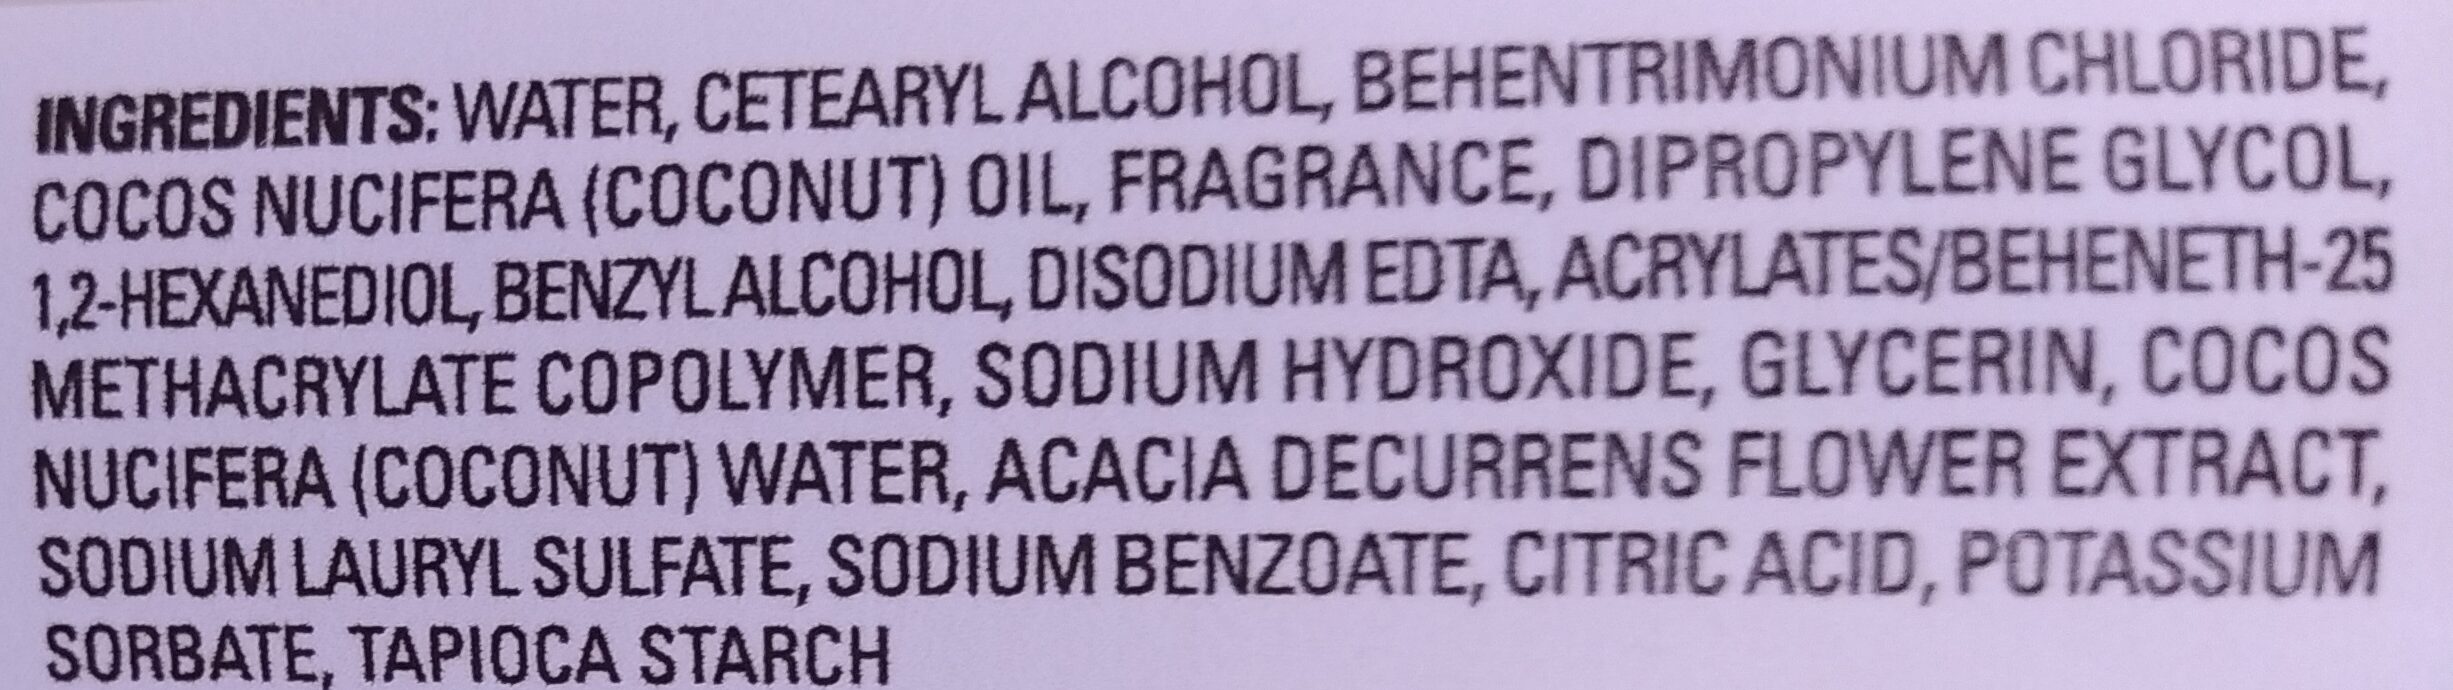 Coconut water & mimosa flower volume conditioner - Ingredients - en